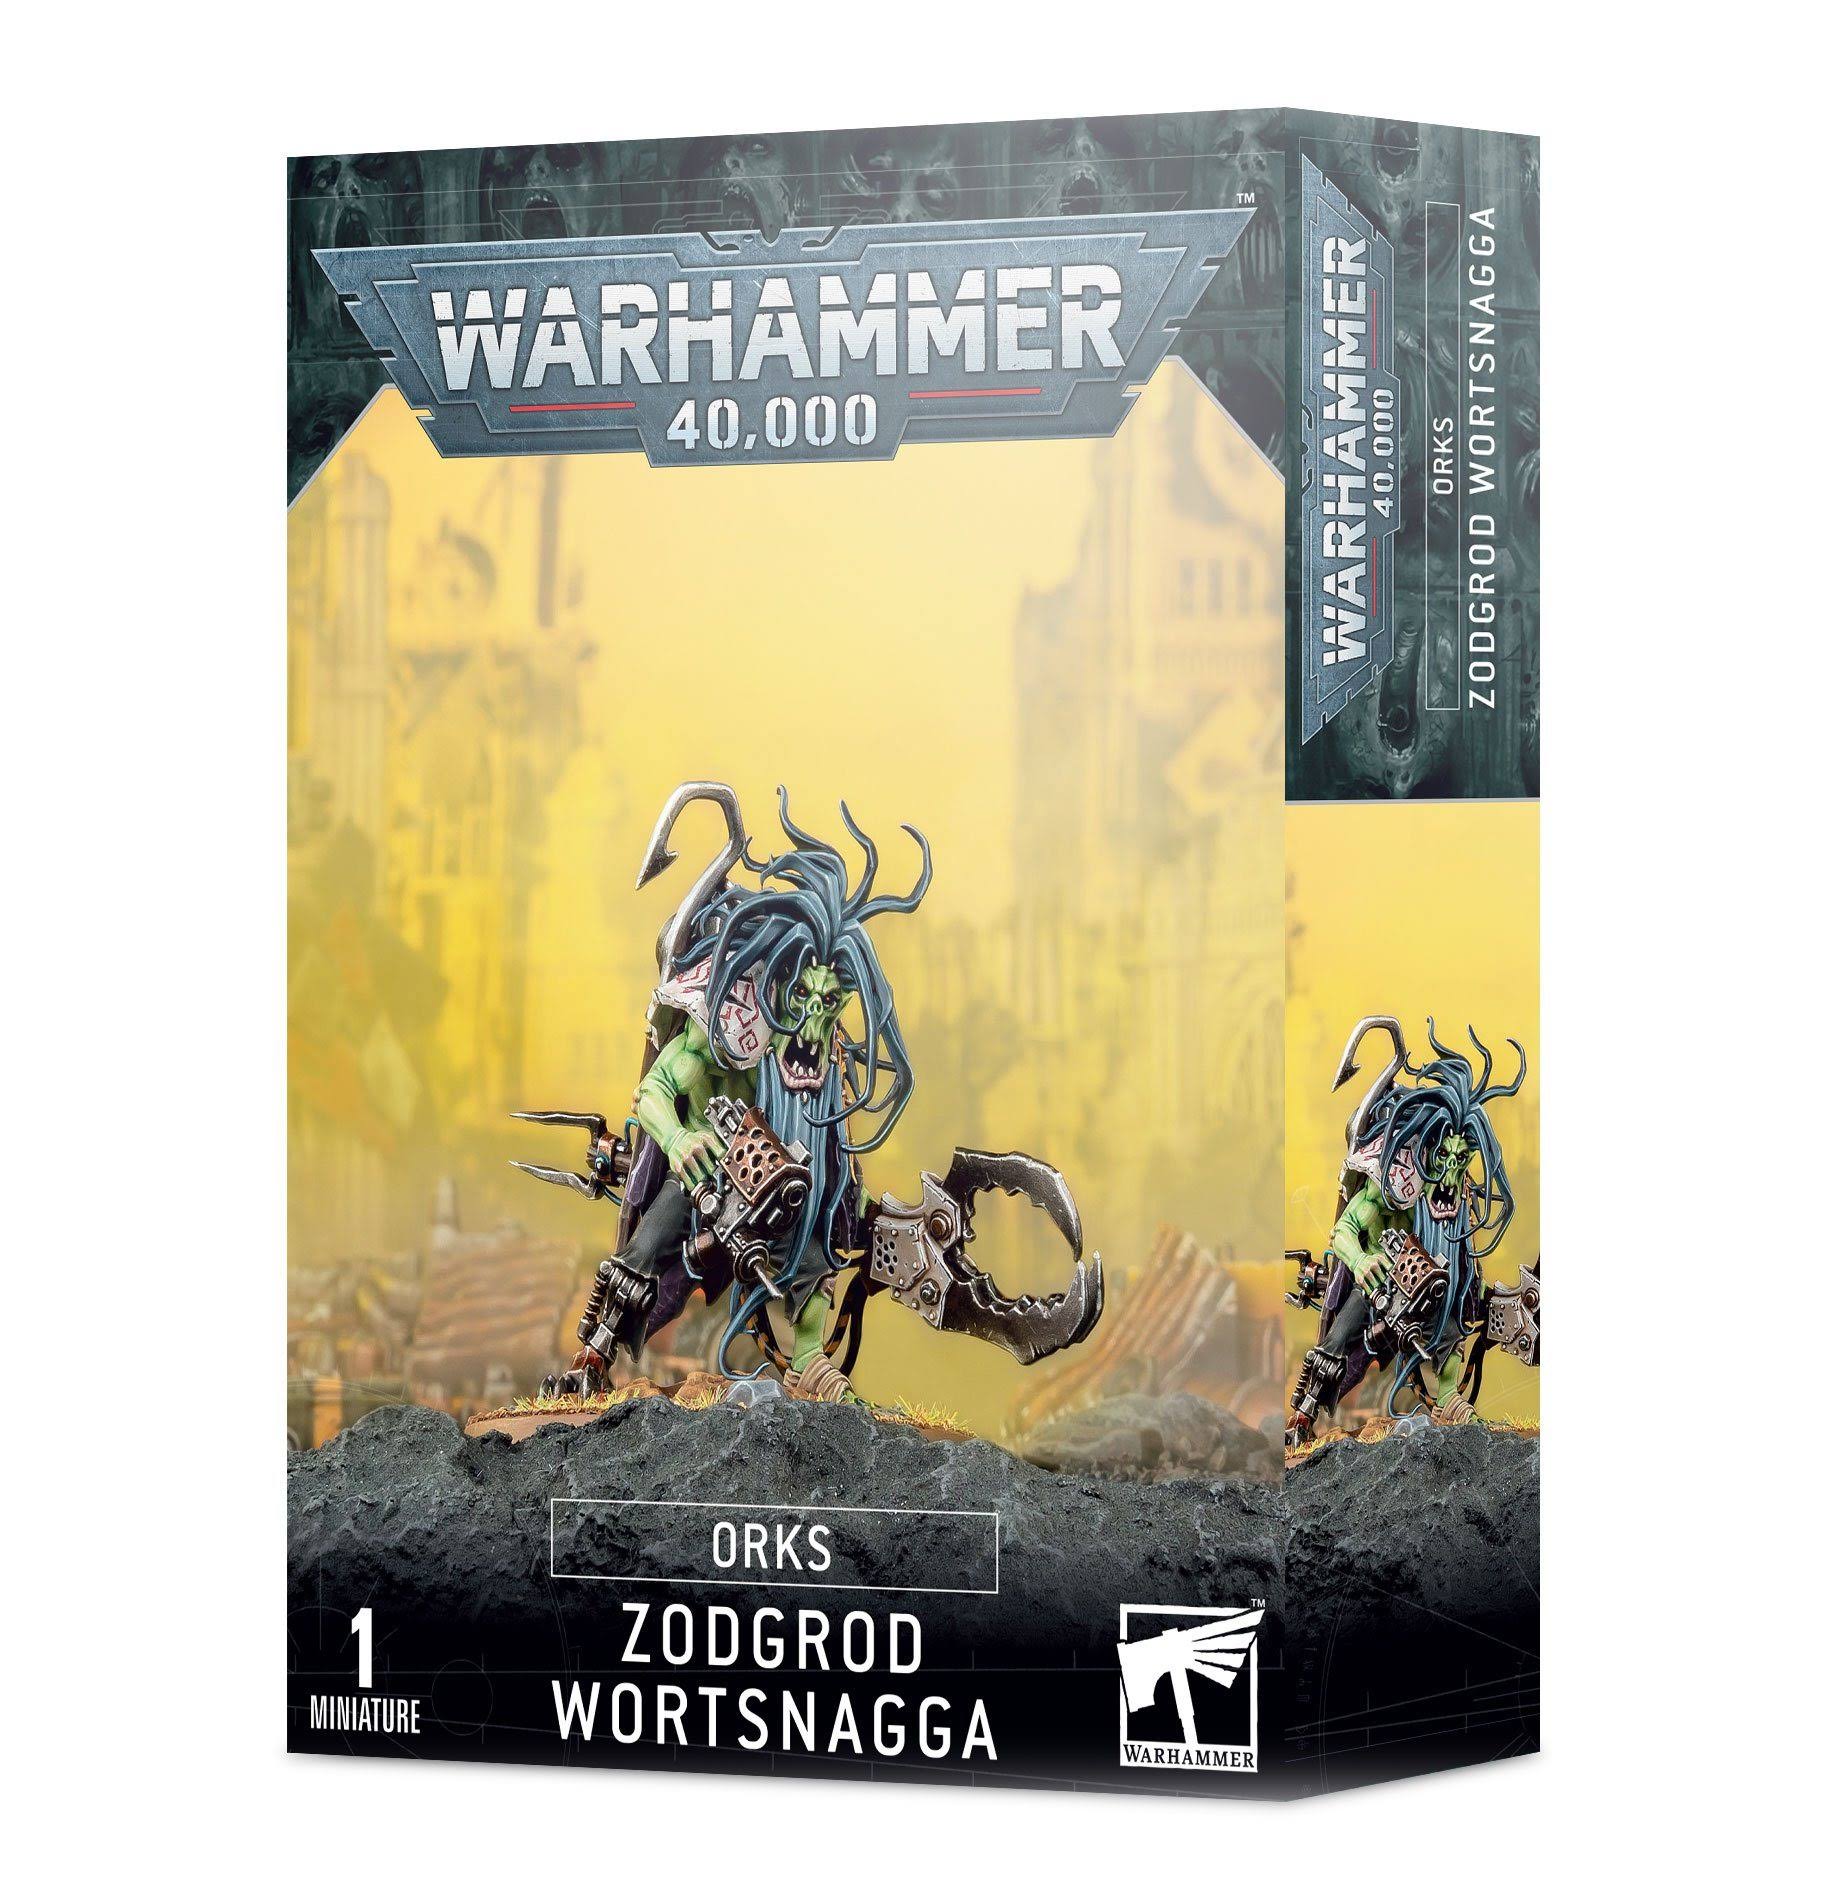 Warhammer 40K Orks: Zodgrod Wortsnagga